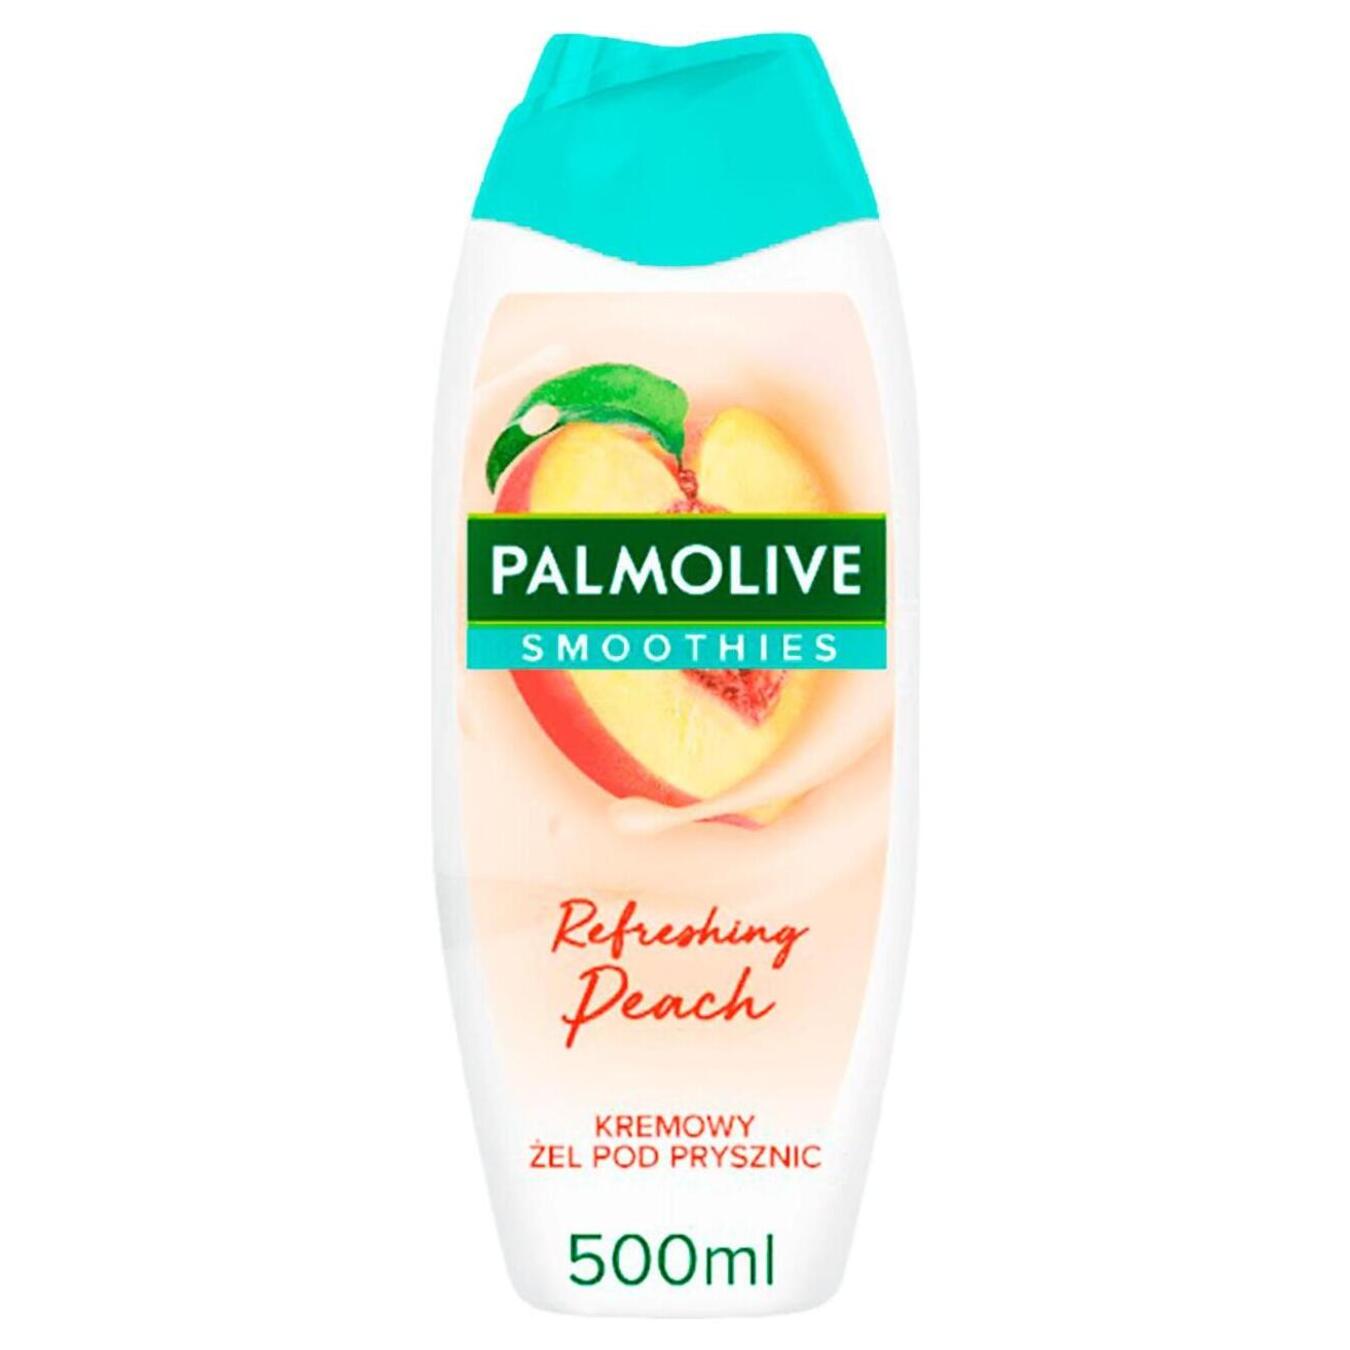 Shower gel Palmolive smoothie refreshing peach 500 ml